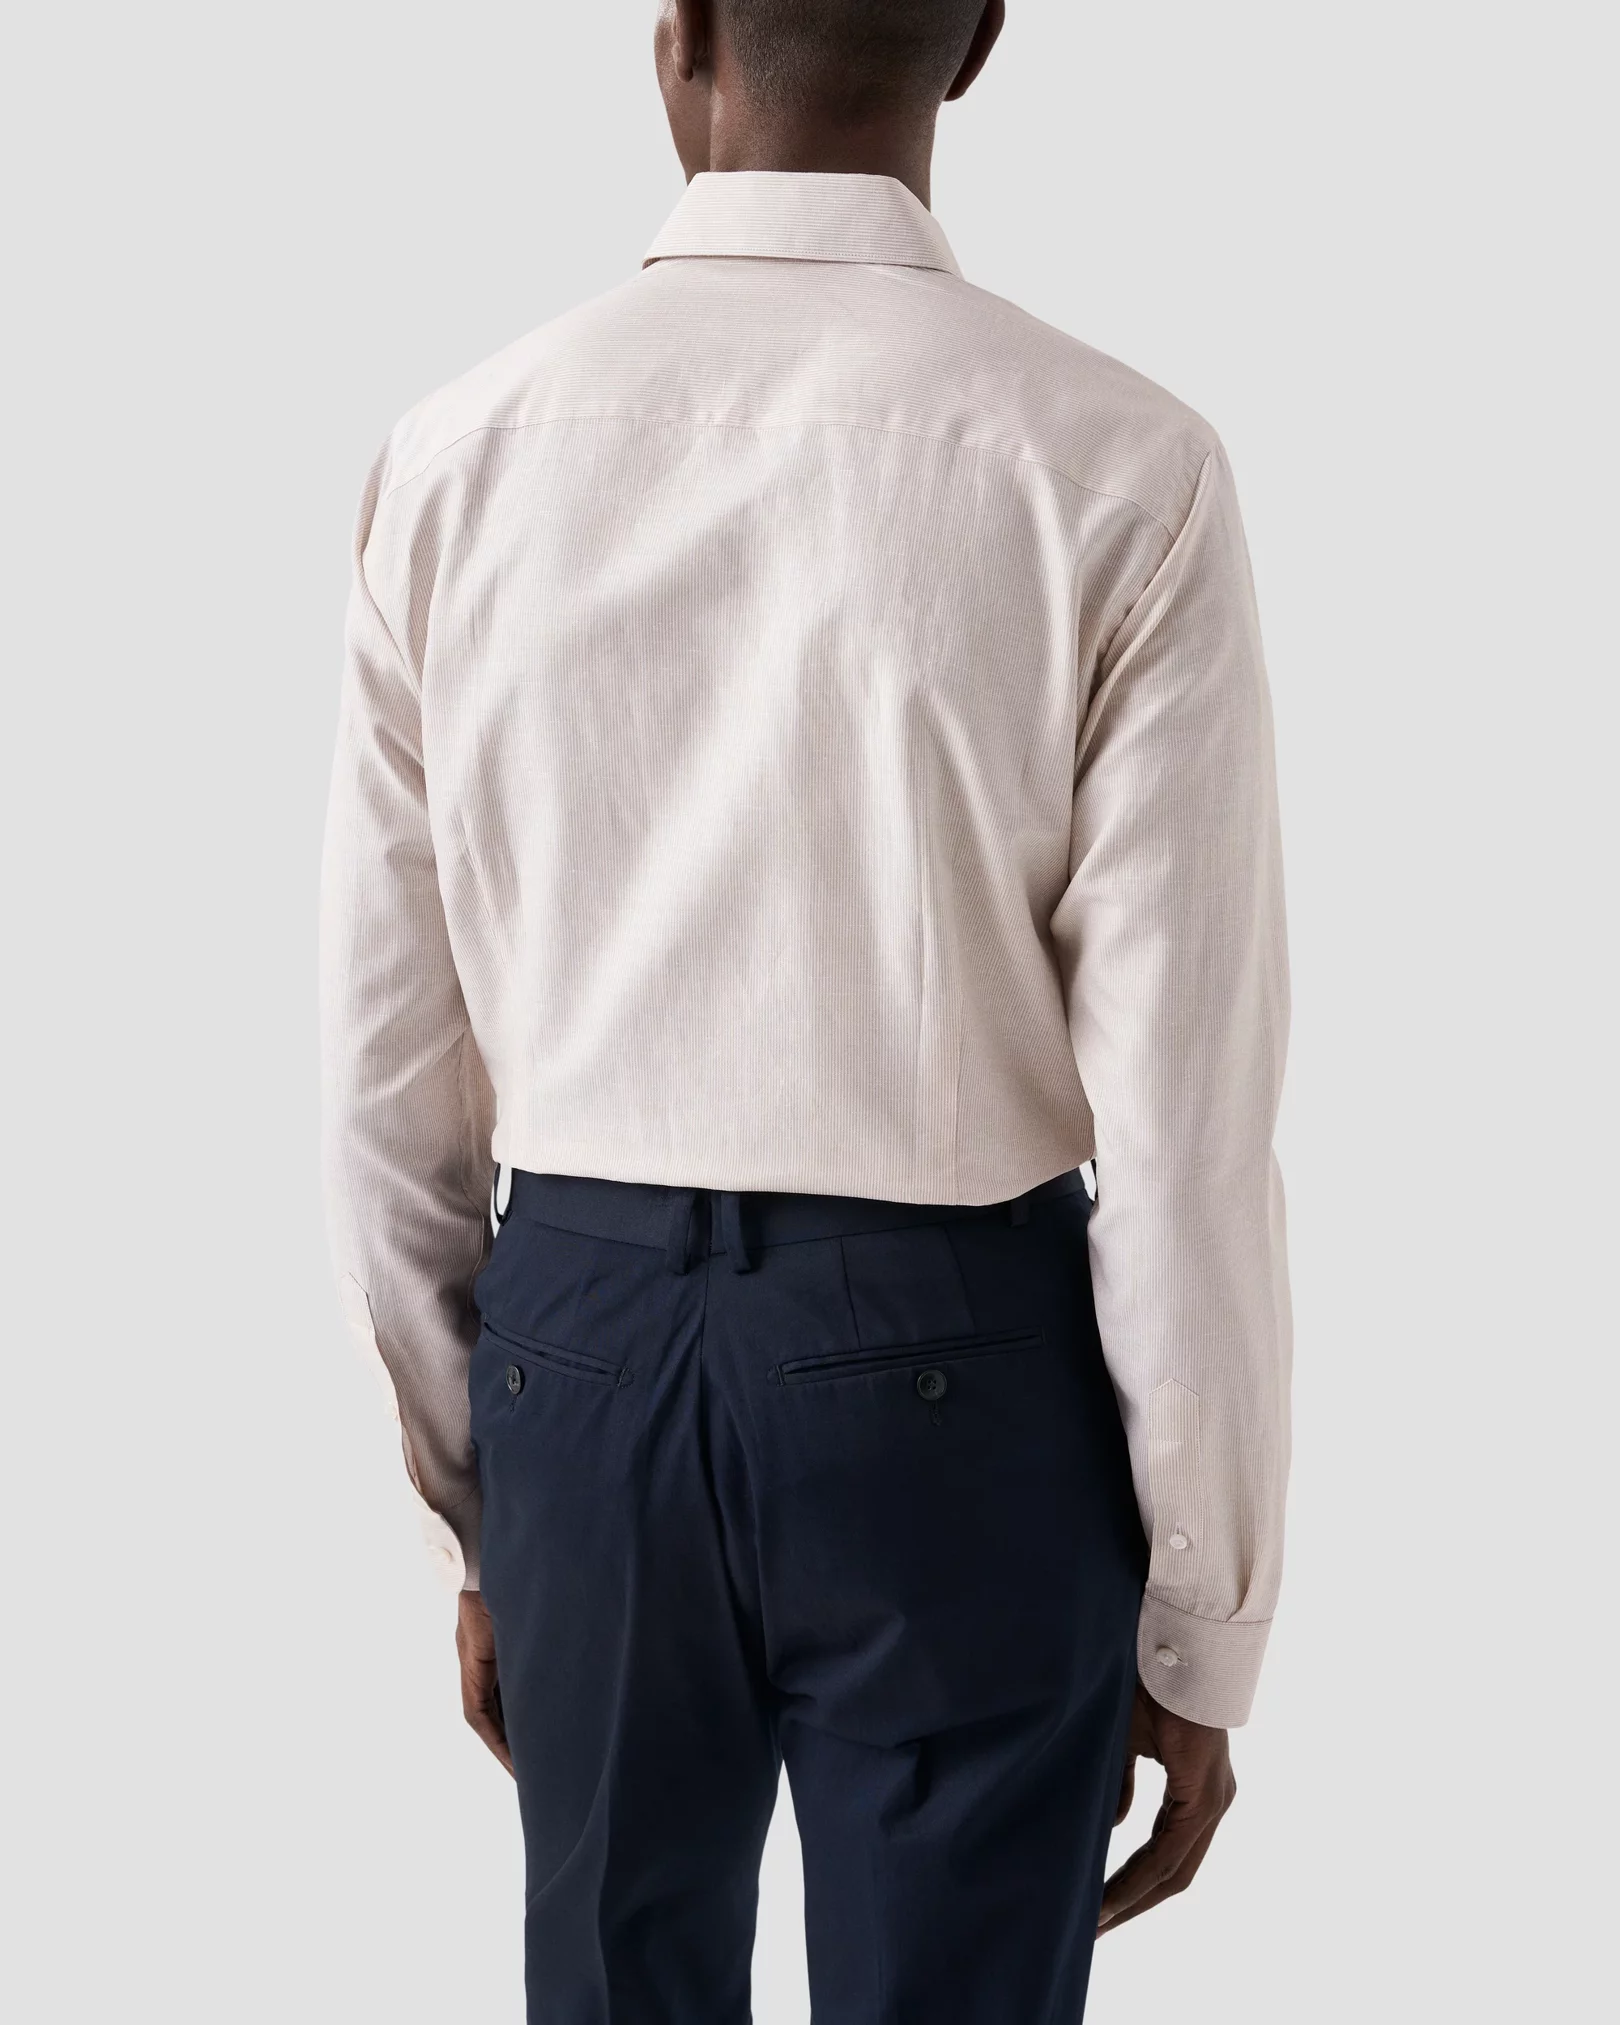 Eton - Light Brown Striped Wrinkle Free Cotton Linen Shirt